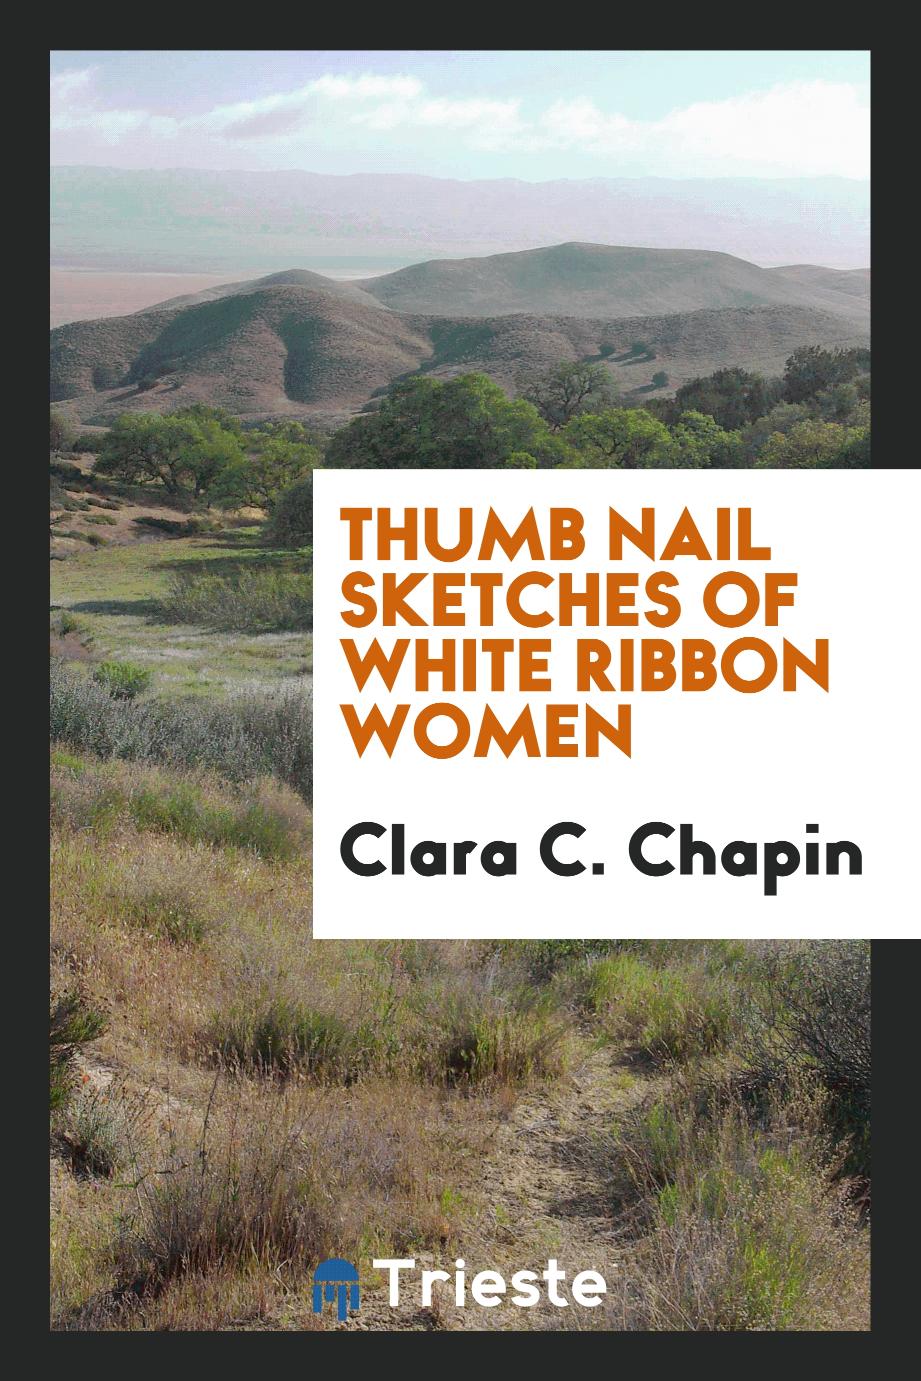 Thumb nail sketches of white ribbon women